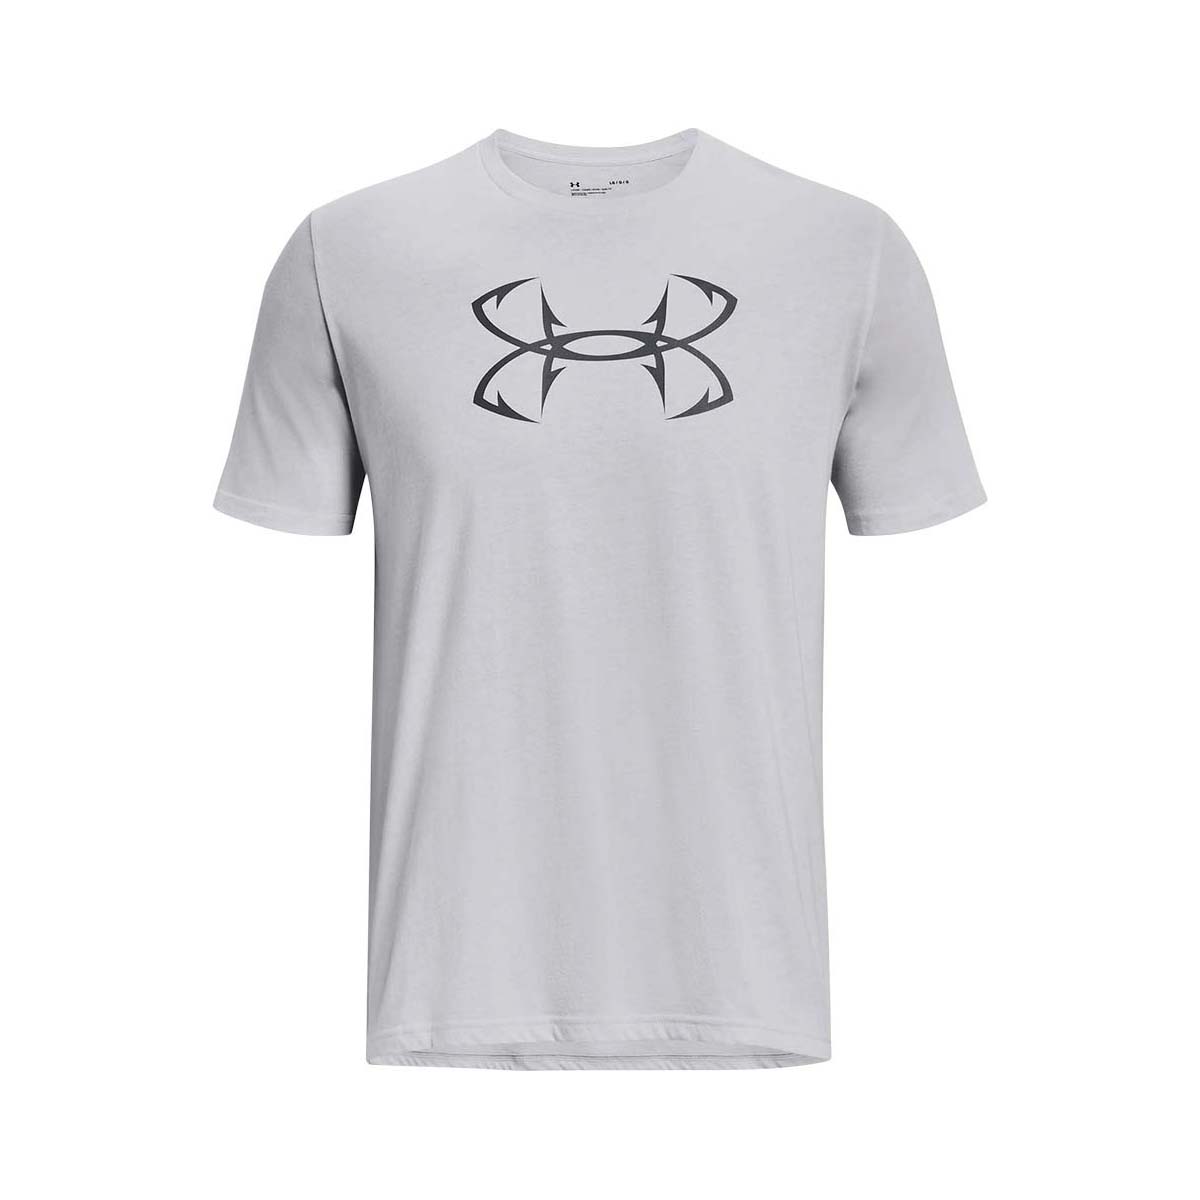 Under Armour Men's Fish Hook Logo Short Sleeve Tee L